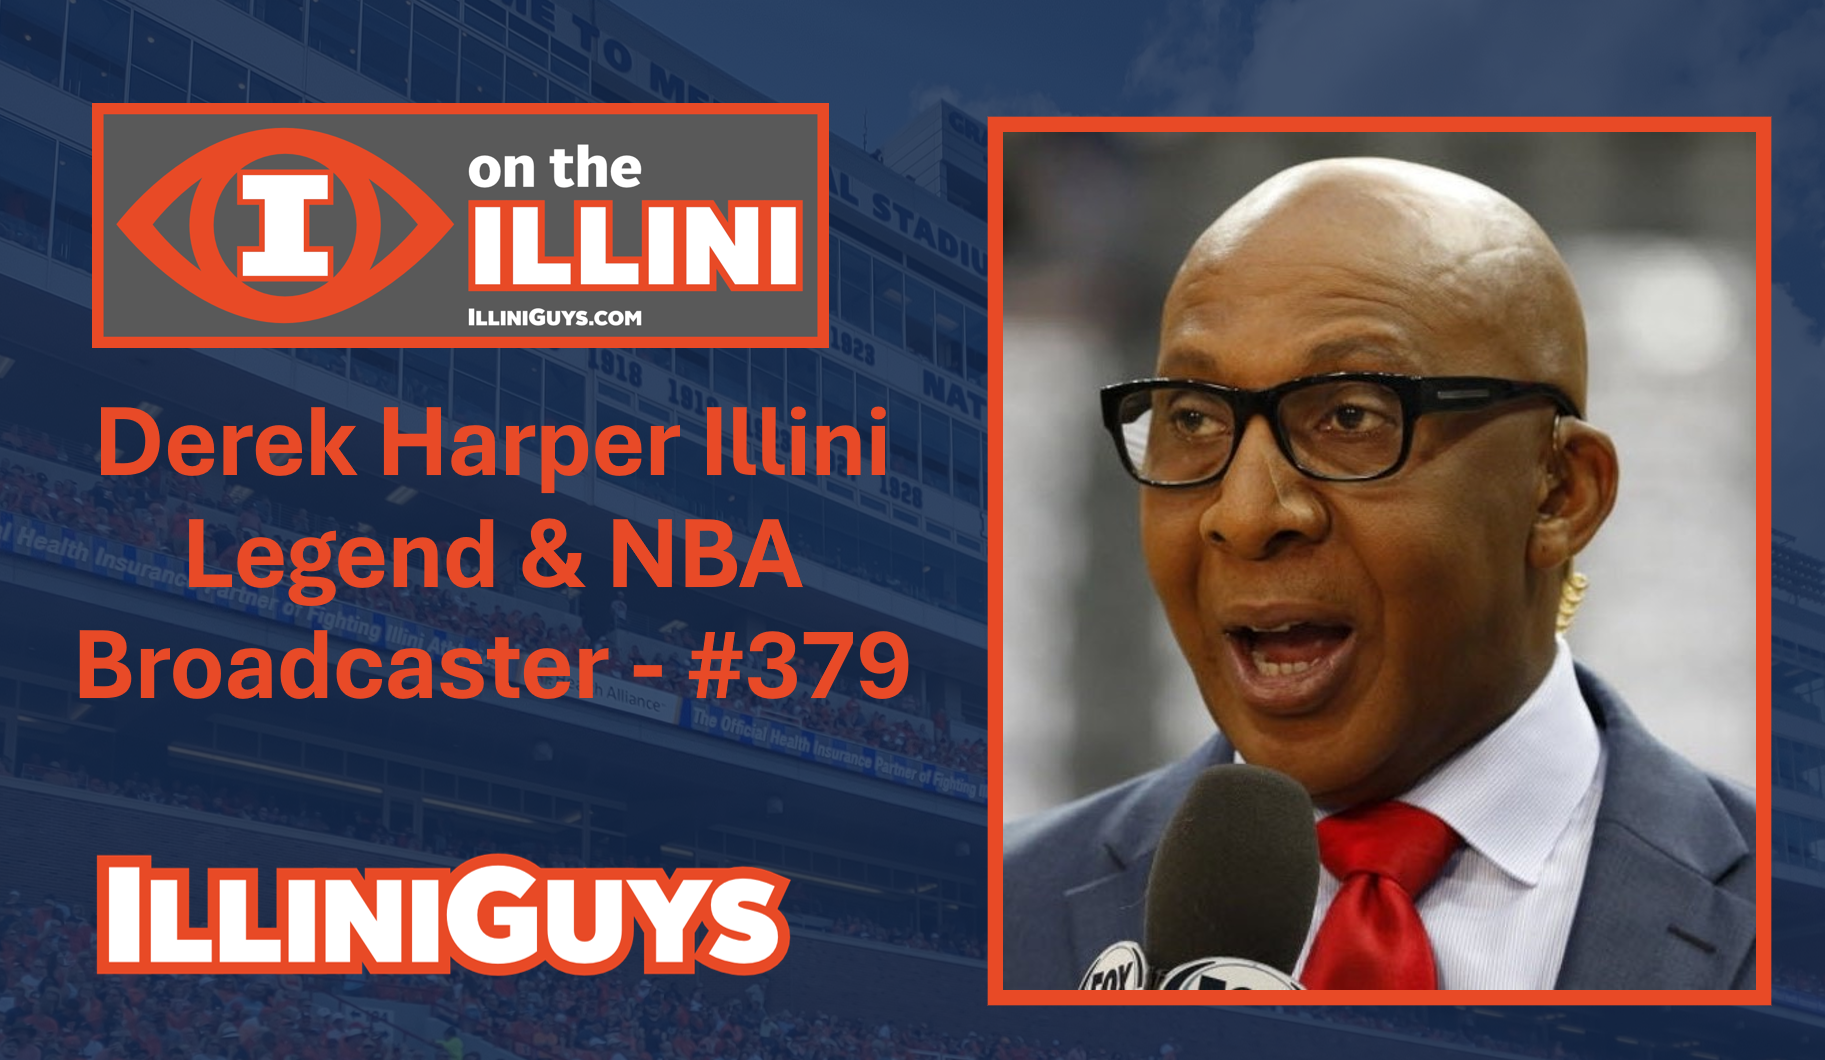 Derek Harper Illini Legend & NBA Broadcaster #379 You Tube Edition